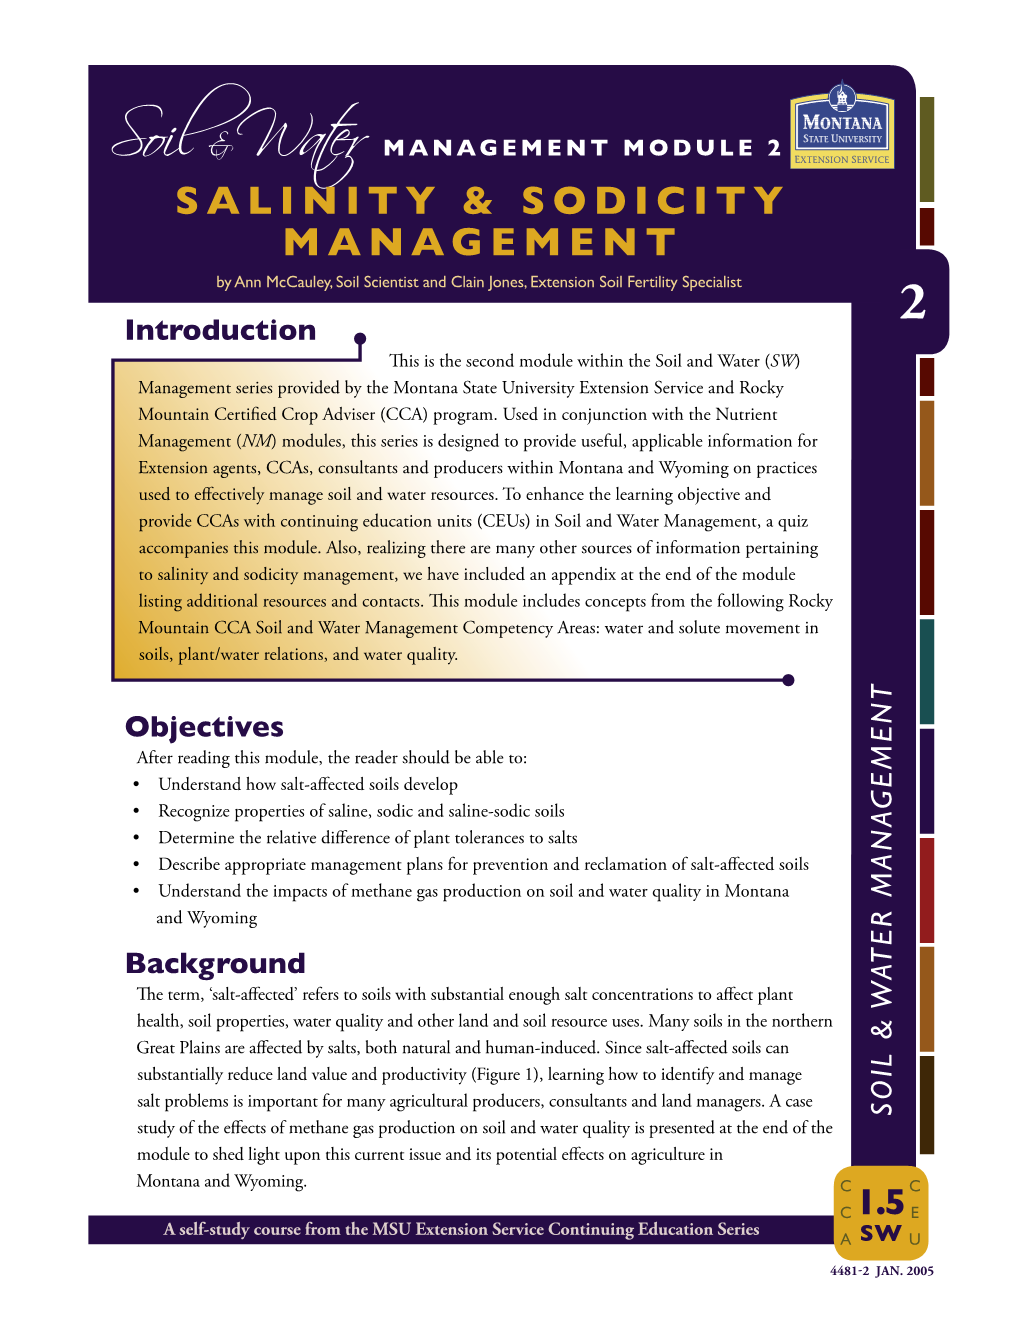 Module 2: Salinity and Sodicity Management